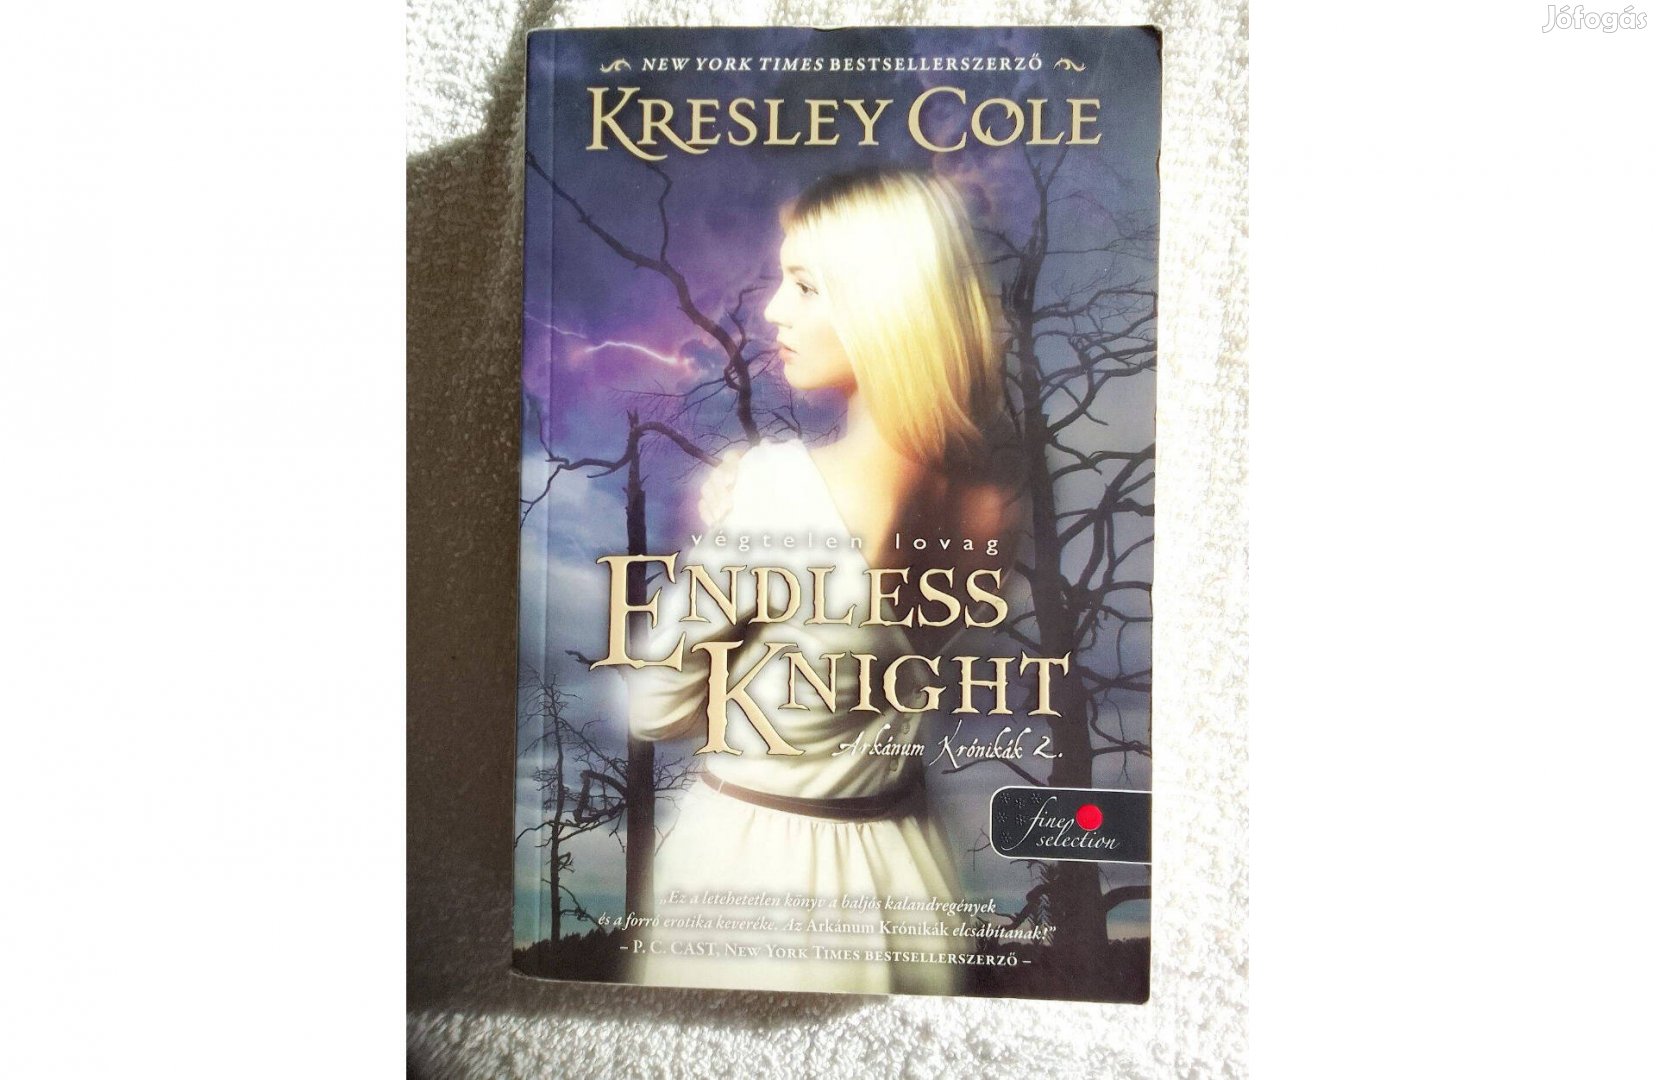 Kresley Cole: Endless knight